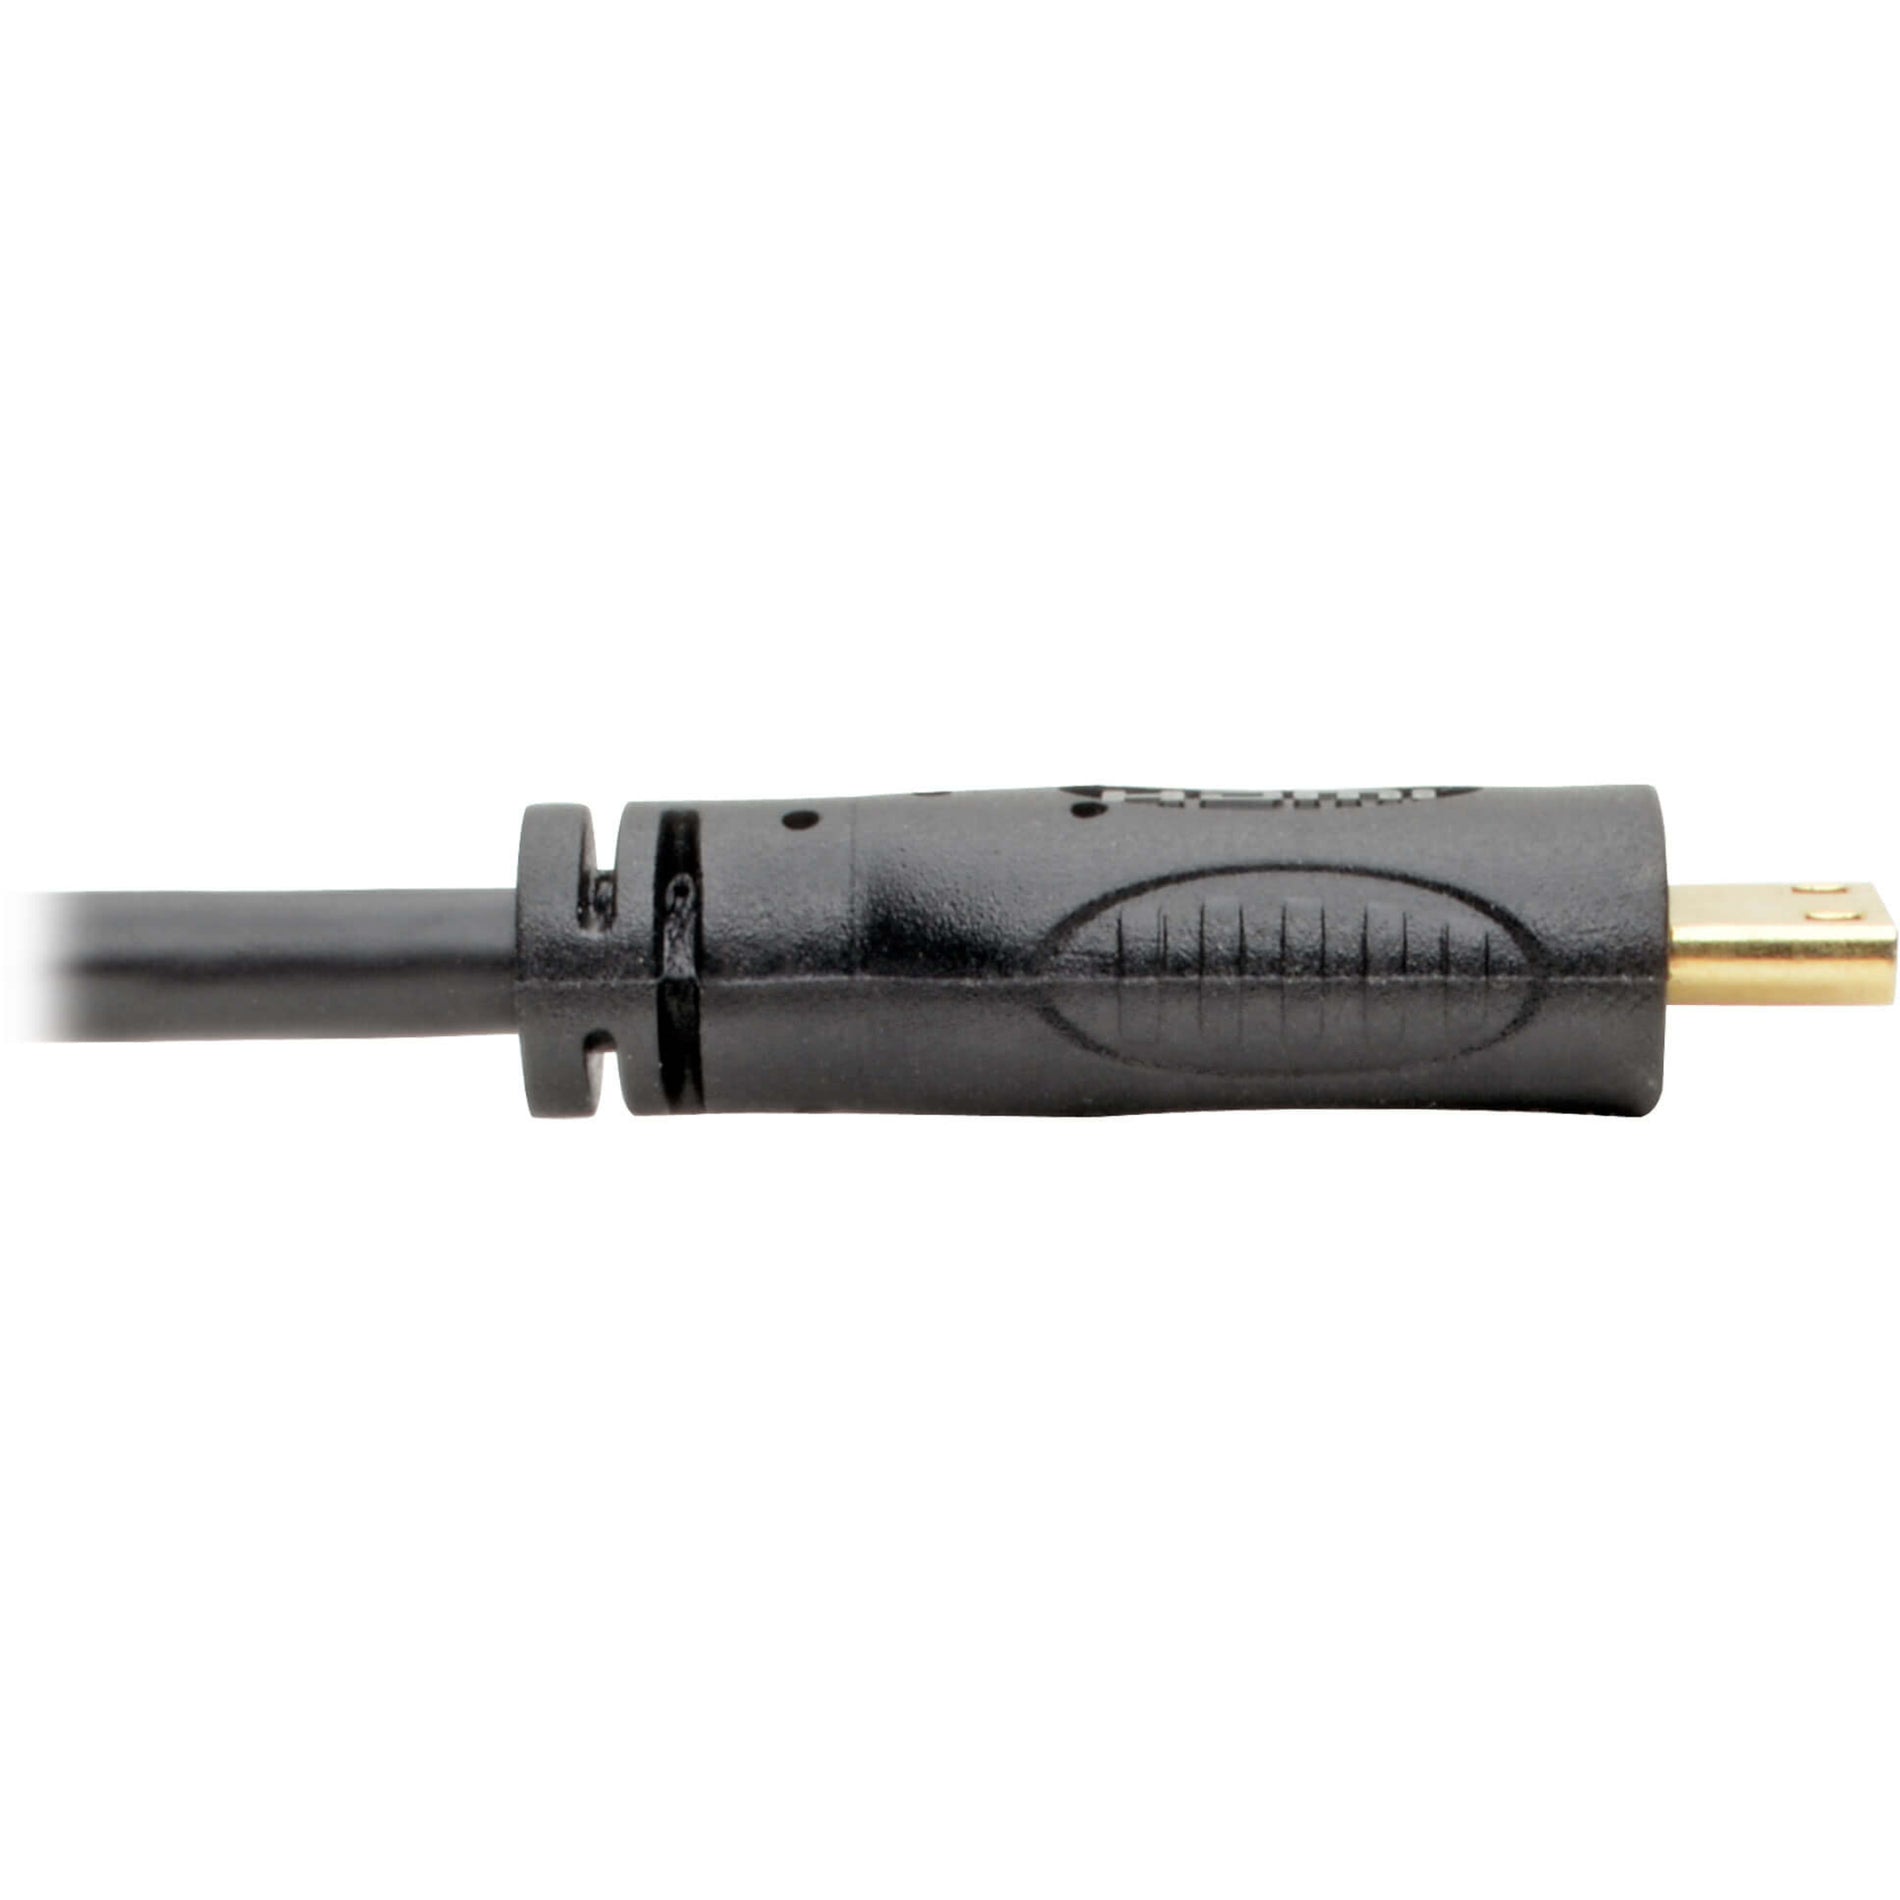 Tripp Lite P131-06N-MINI HDMI/VGA Video Cable, 6", Copper Conductor, TAA Compliant, RoHS Certified